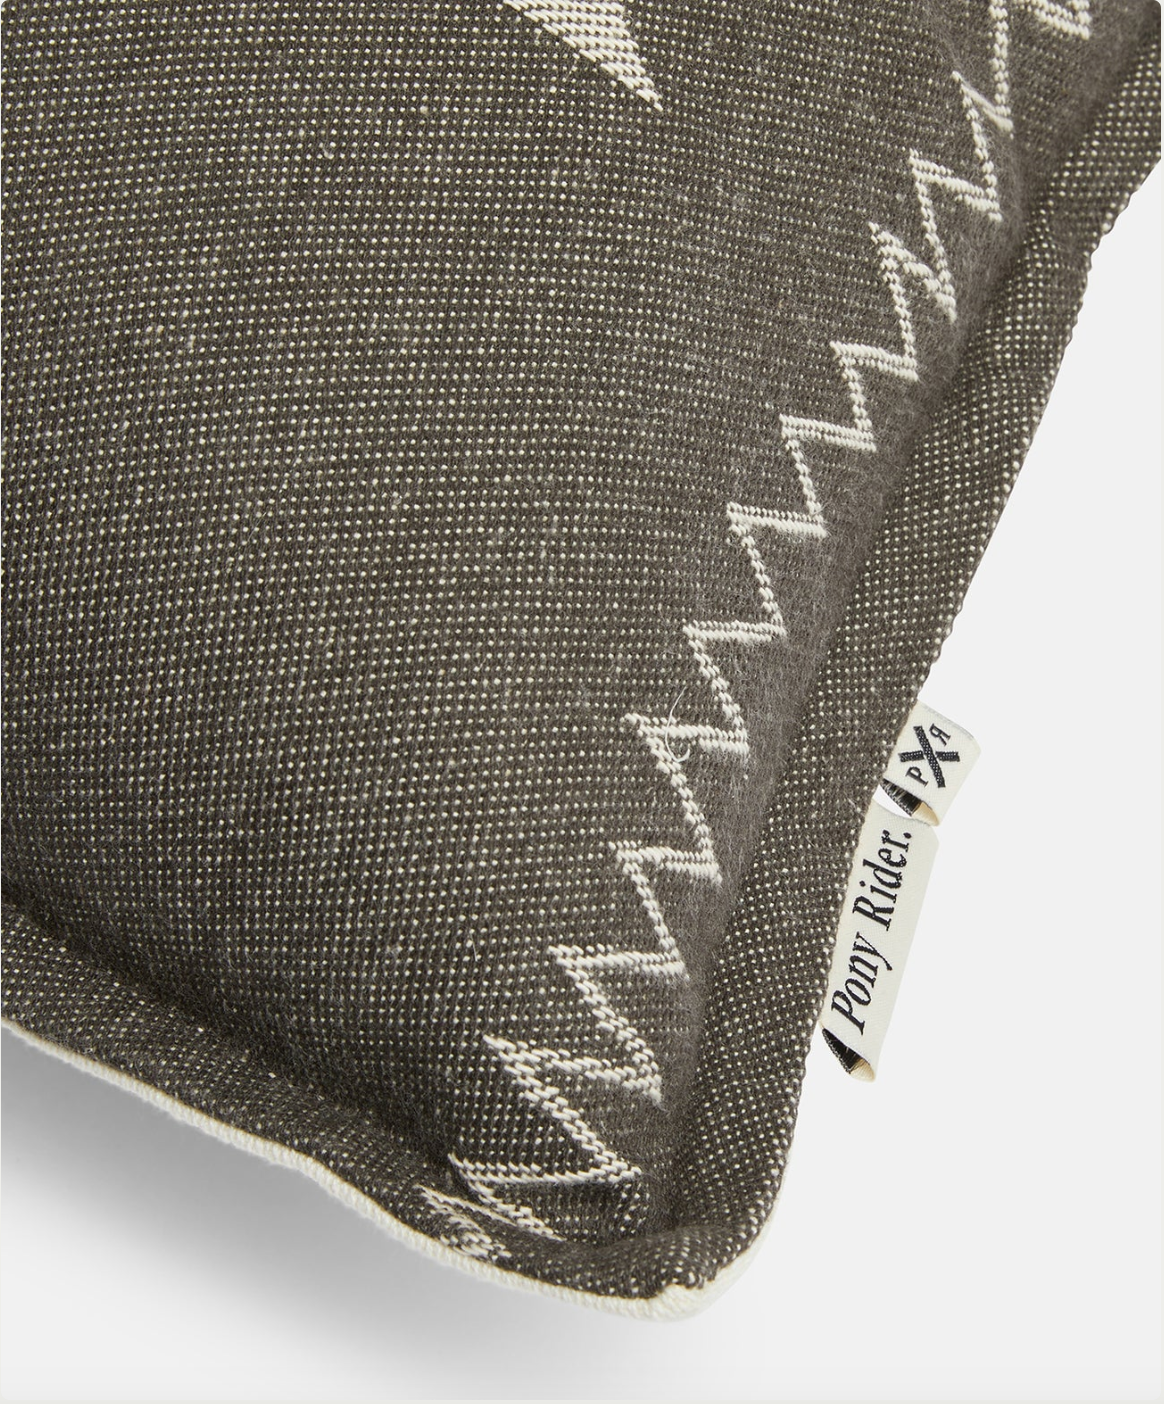 Haymaker Cushion Cover, Coal